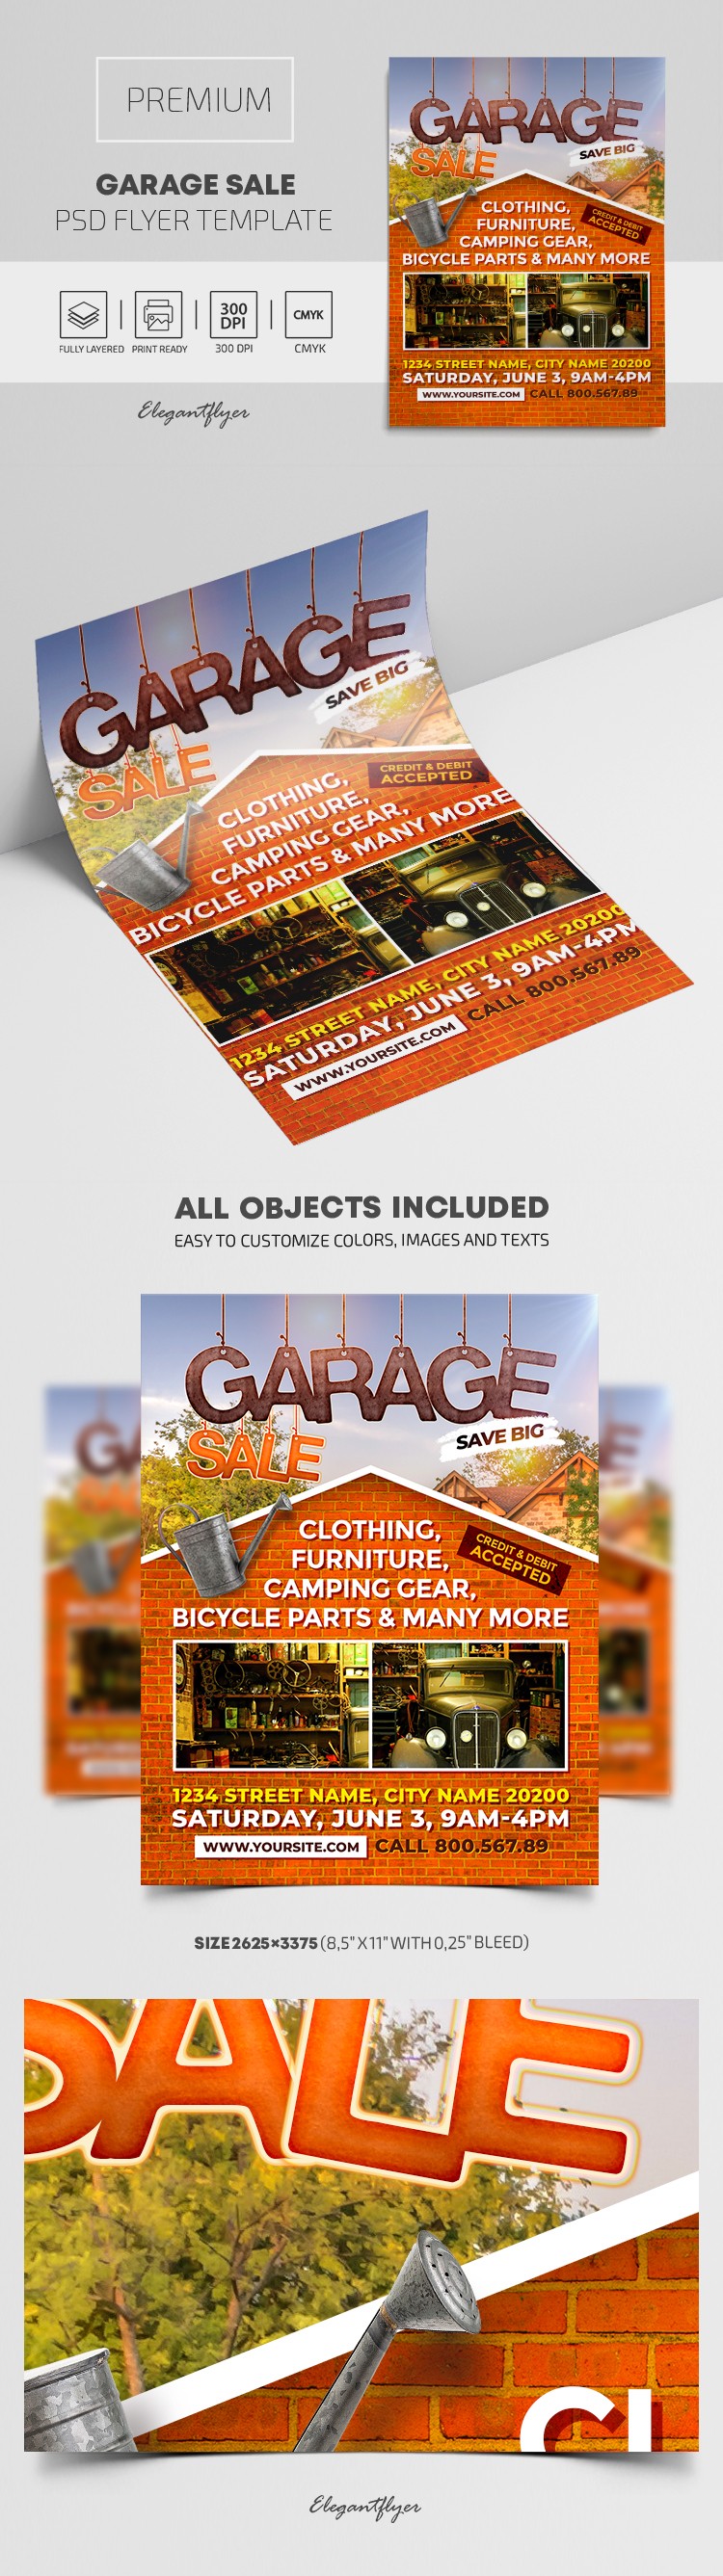 Panfleto de venda de garagem by ElegantFlyer